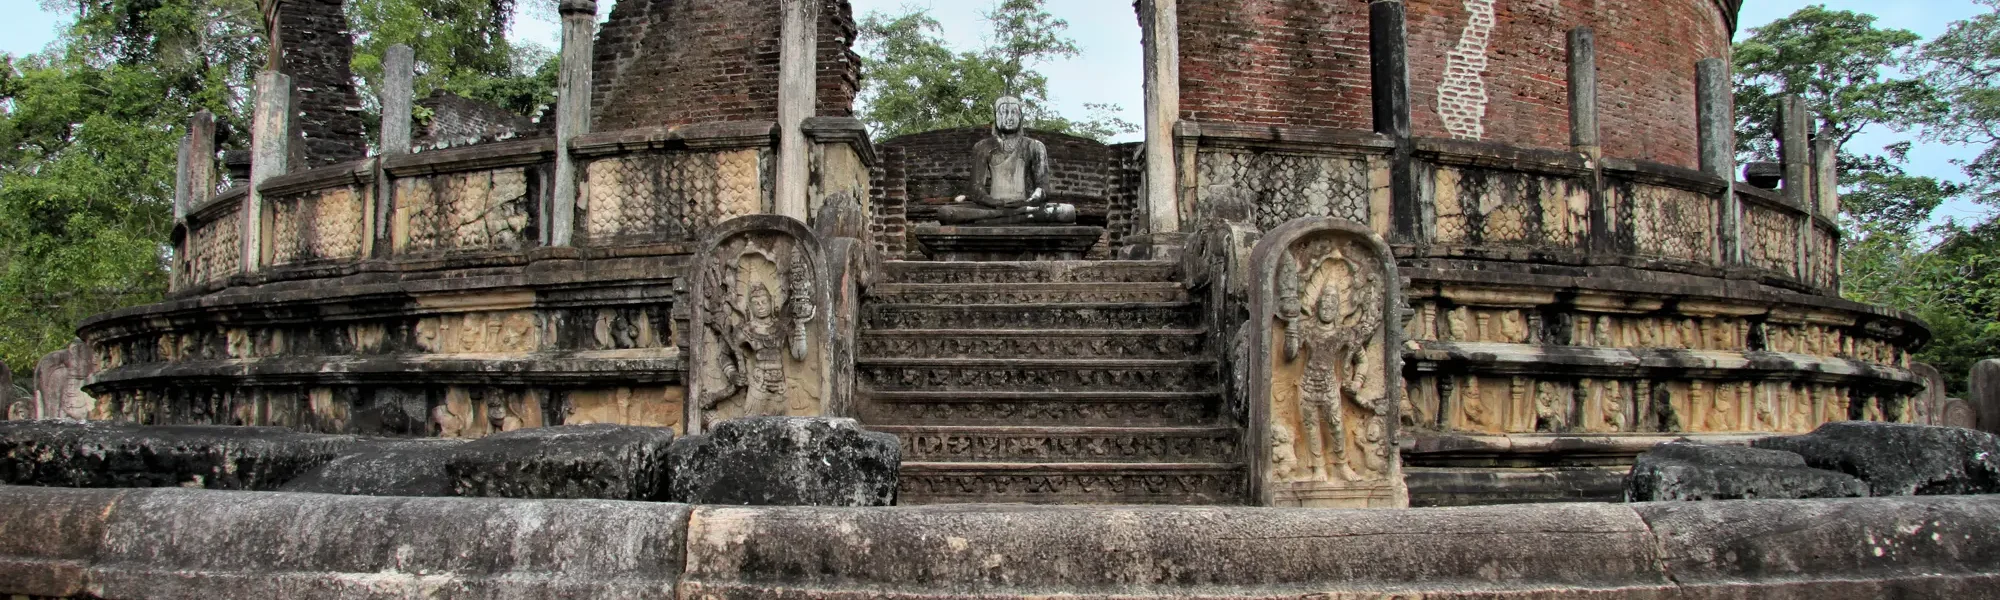 Hoogtepunten van Sri Lanka - Polonnaruwa